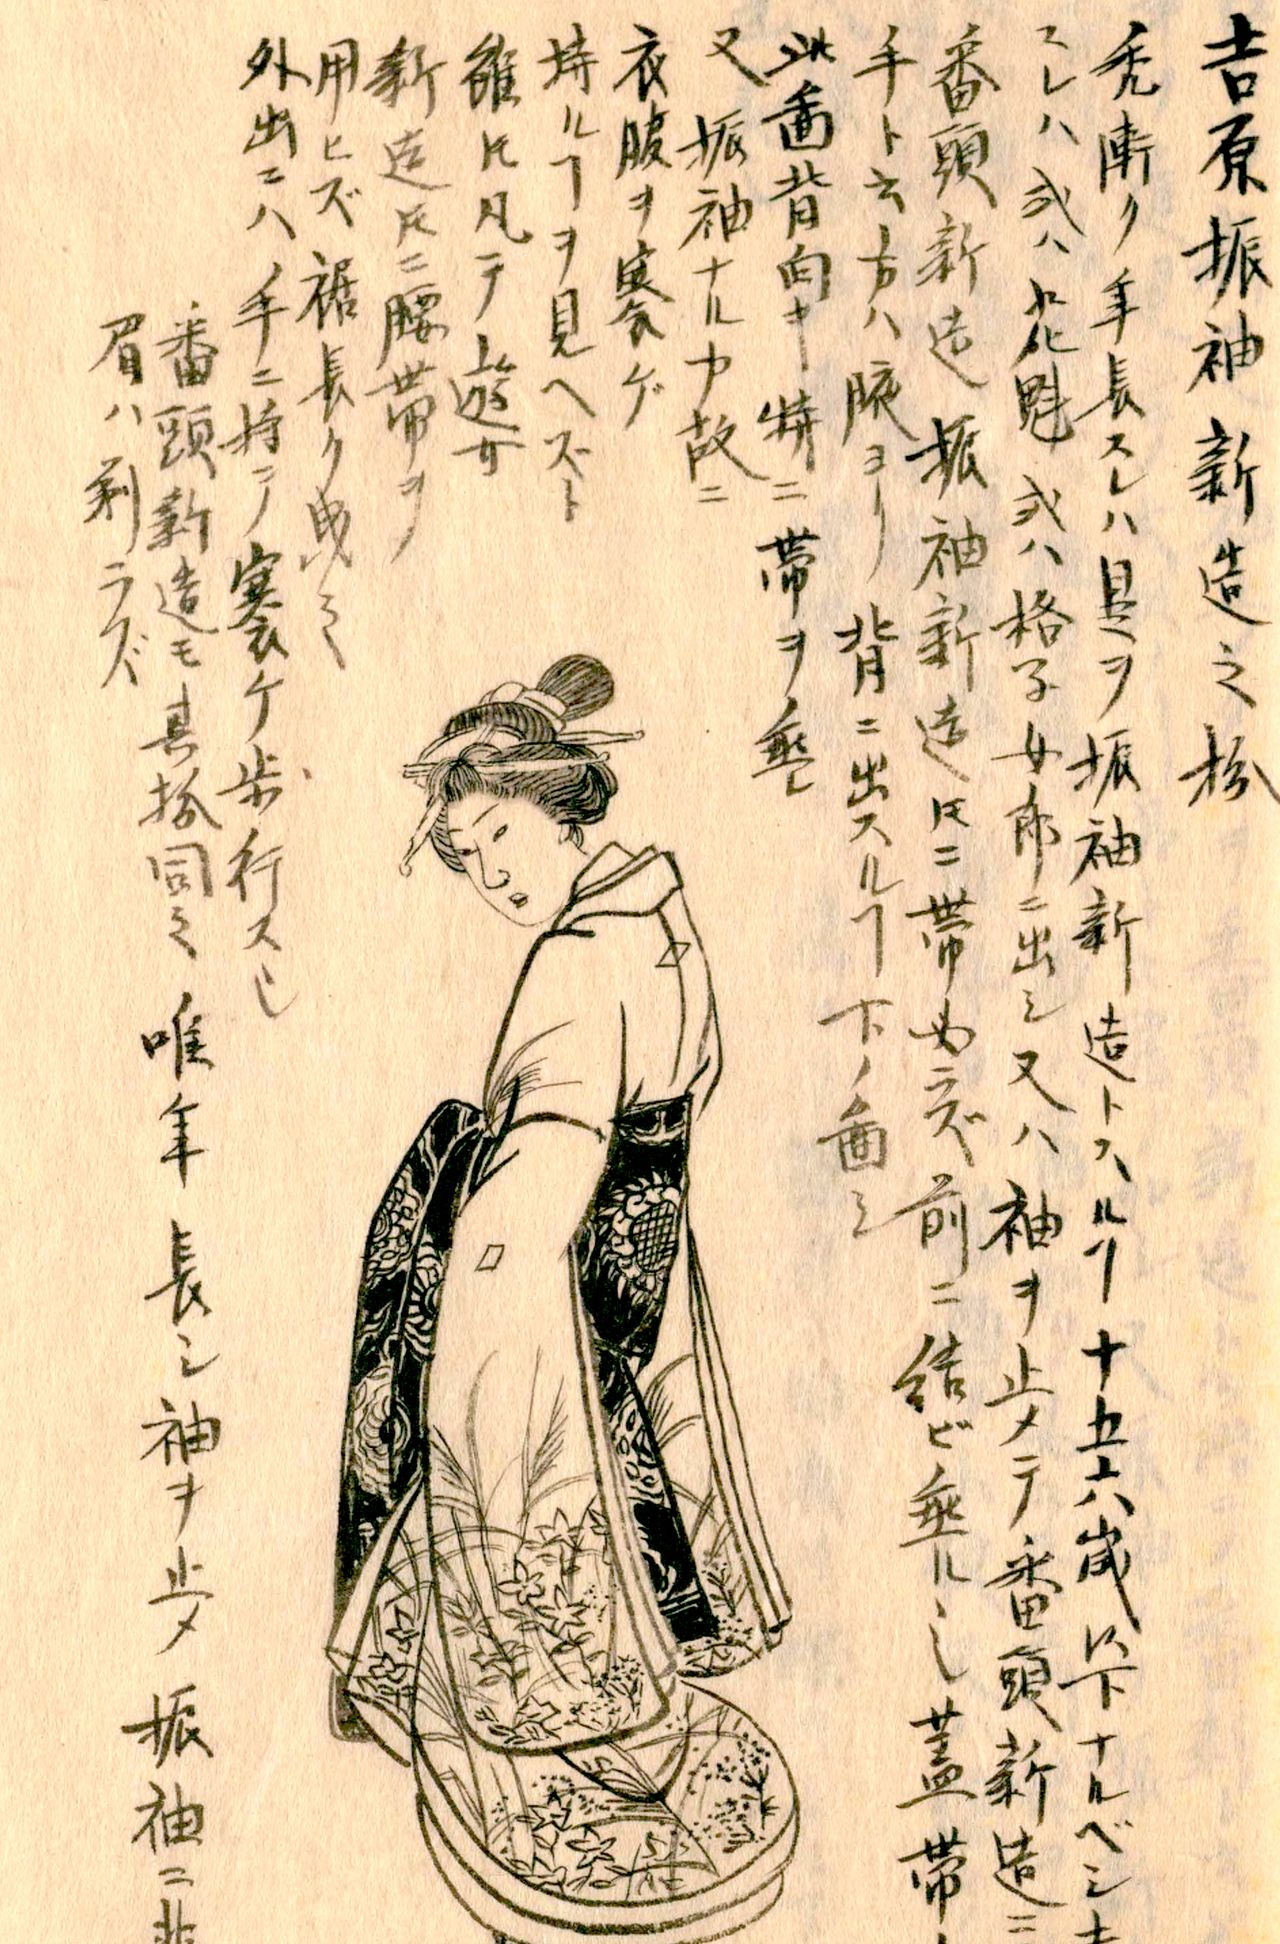 Une shinzô de Yoshiwara. Illustration provenant de Morisada mankô (Estampes de Morisada). (Avec l’aimable autorisation de la Bibliothèque de la Diète nationale)